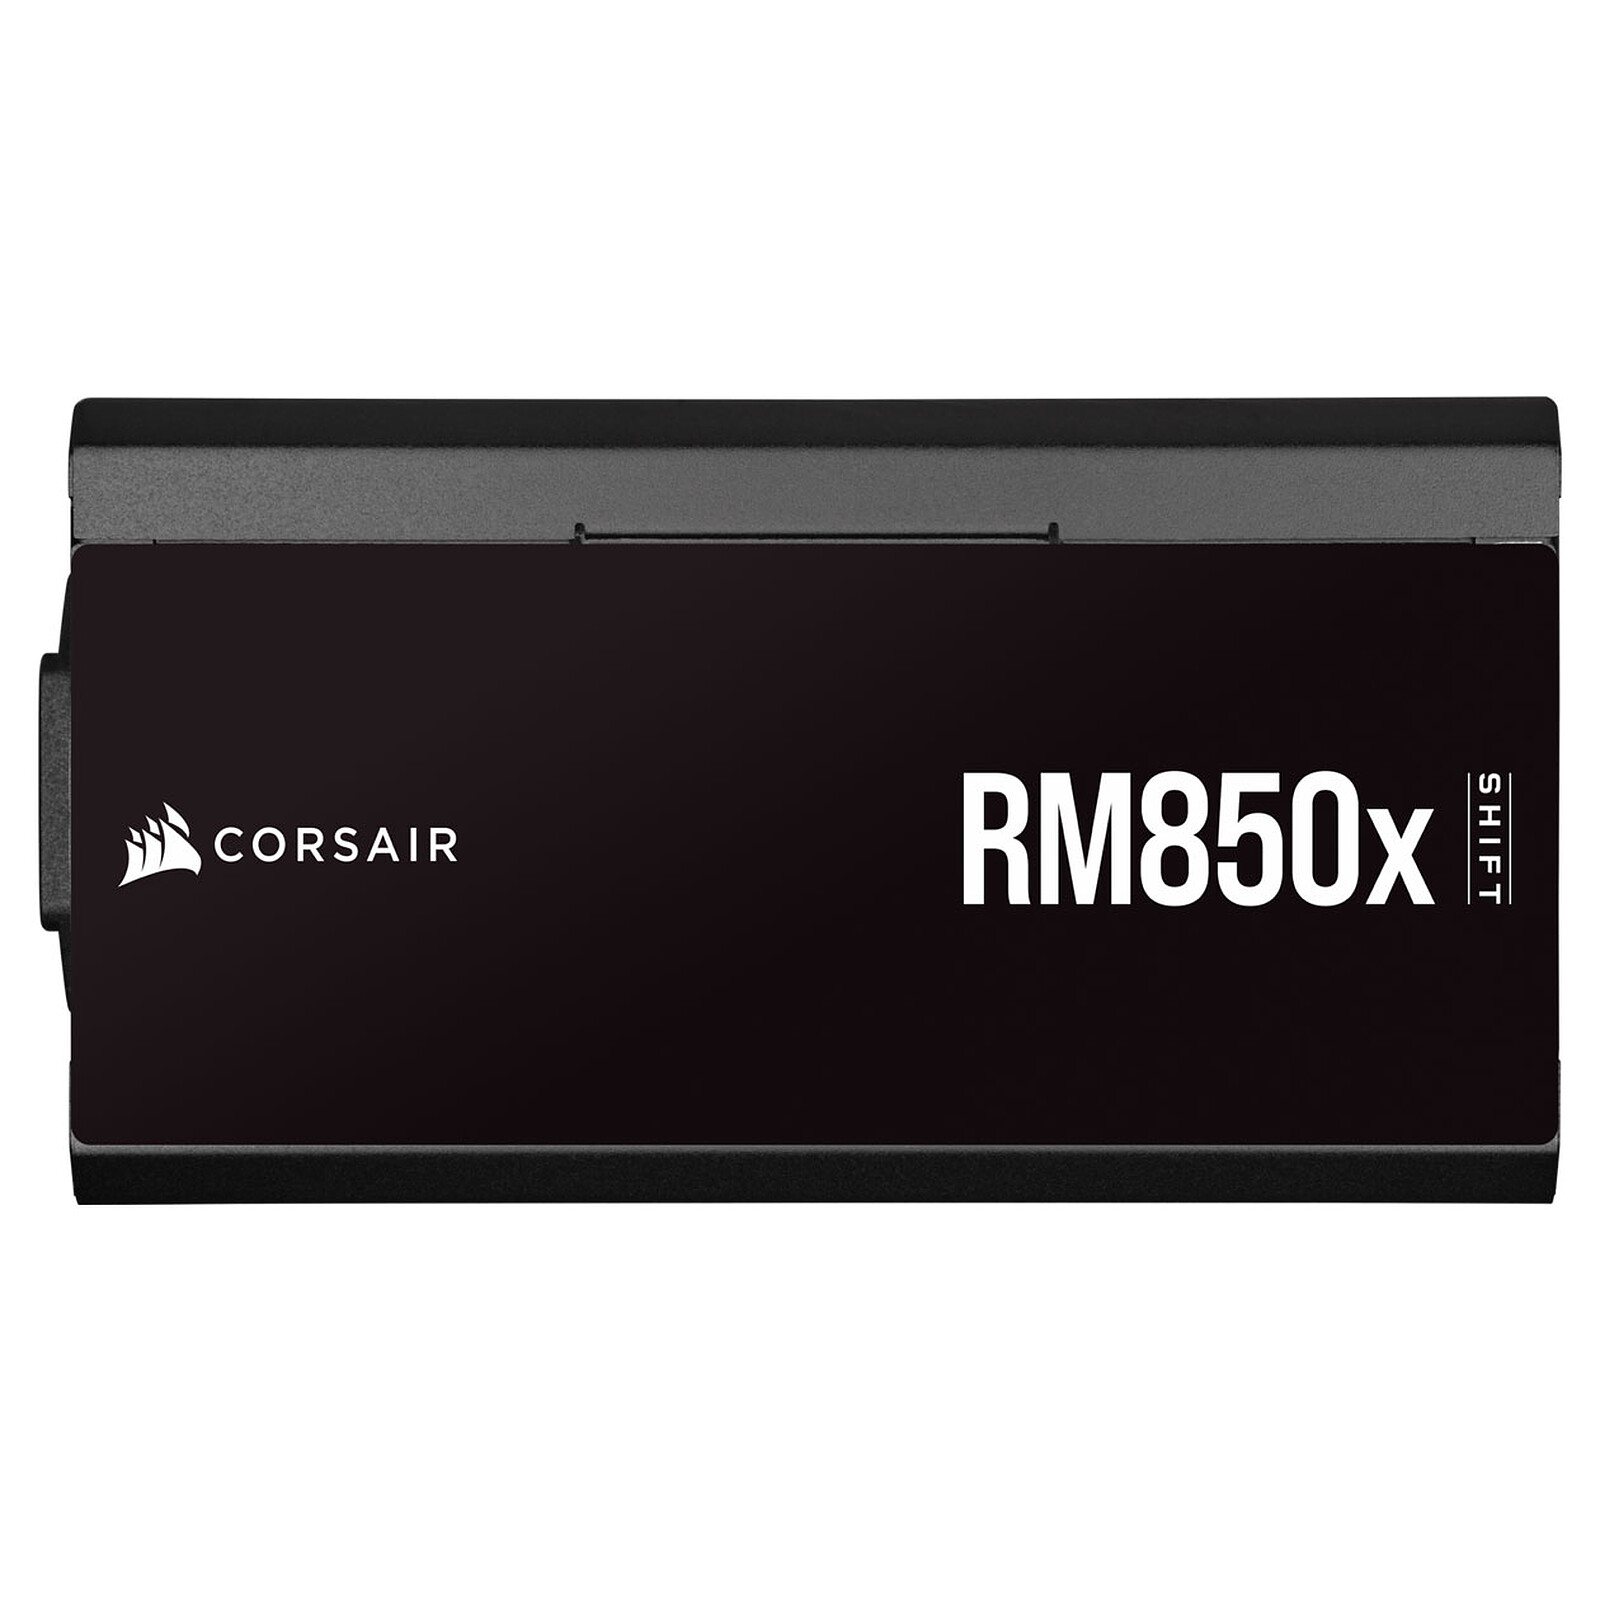 Unboxing Corsair RM850x Shift ATX 3.0 PCIe Gen 5 Power Supply